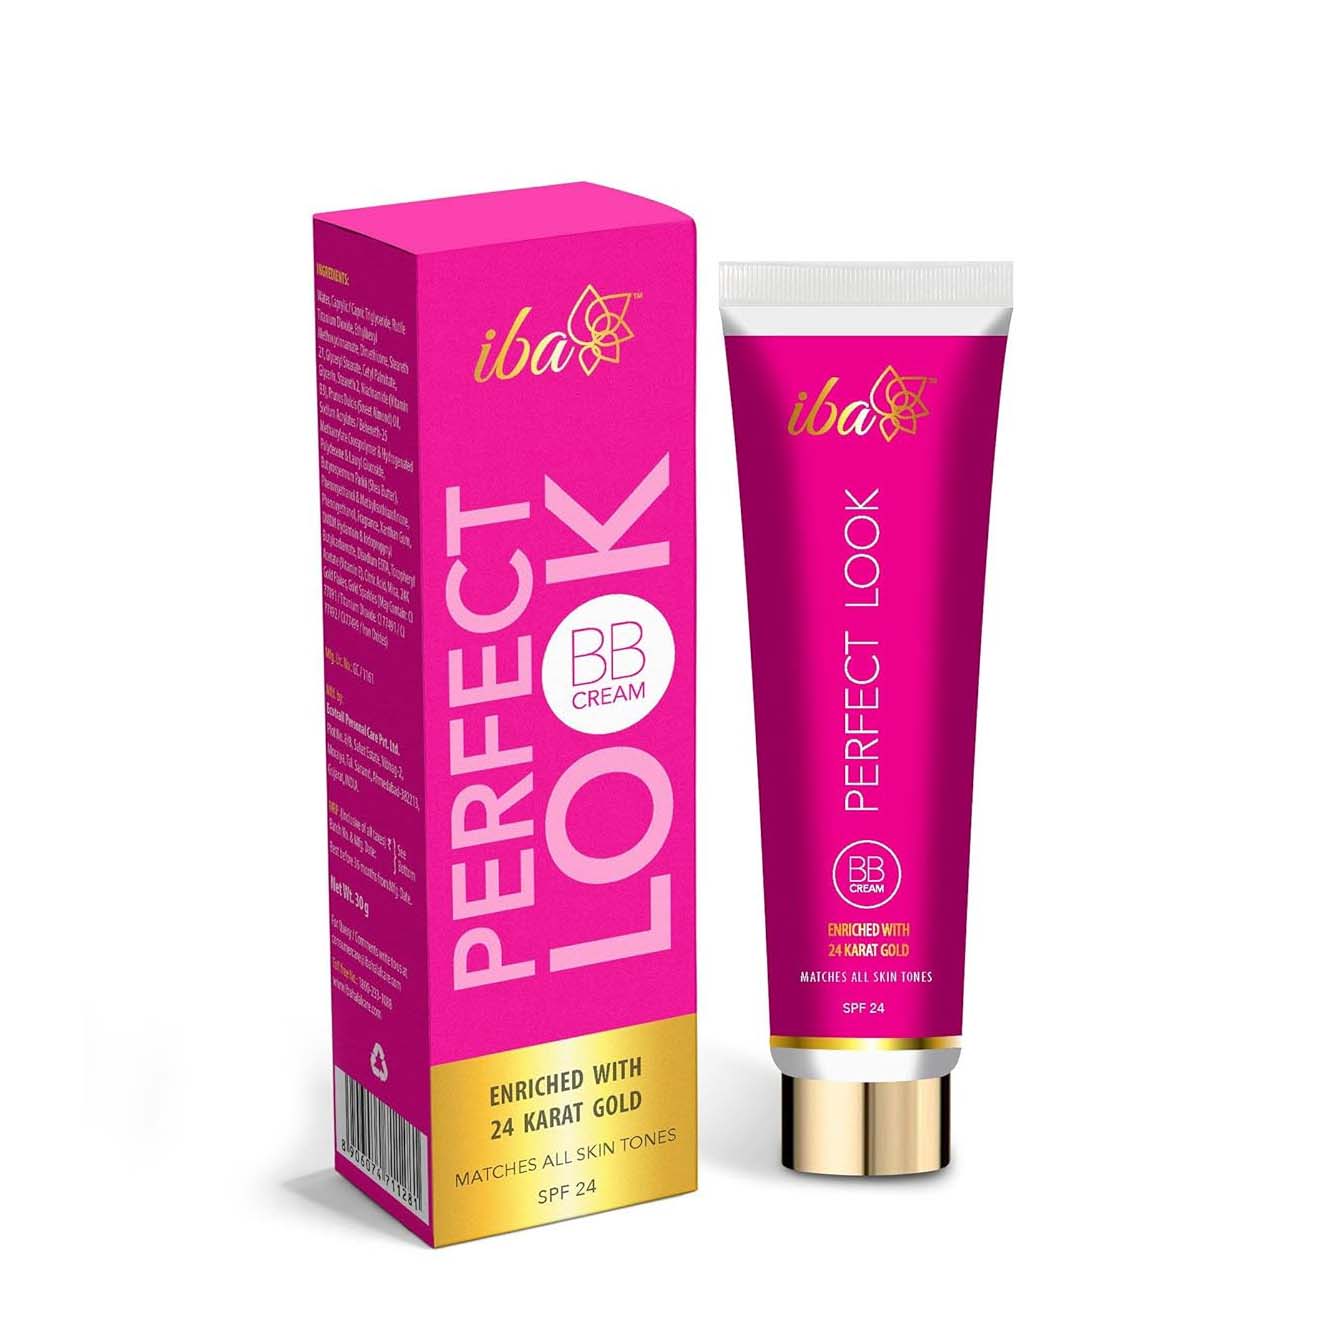 Iba Perfect Look BB Cream With 24 Karat Gold (30gm) - Medium